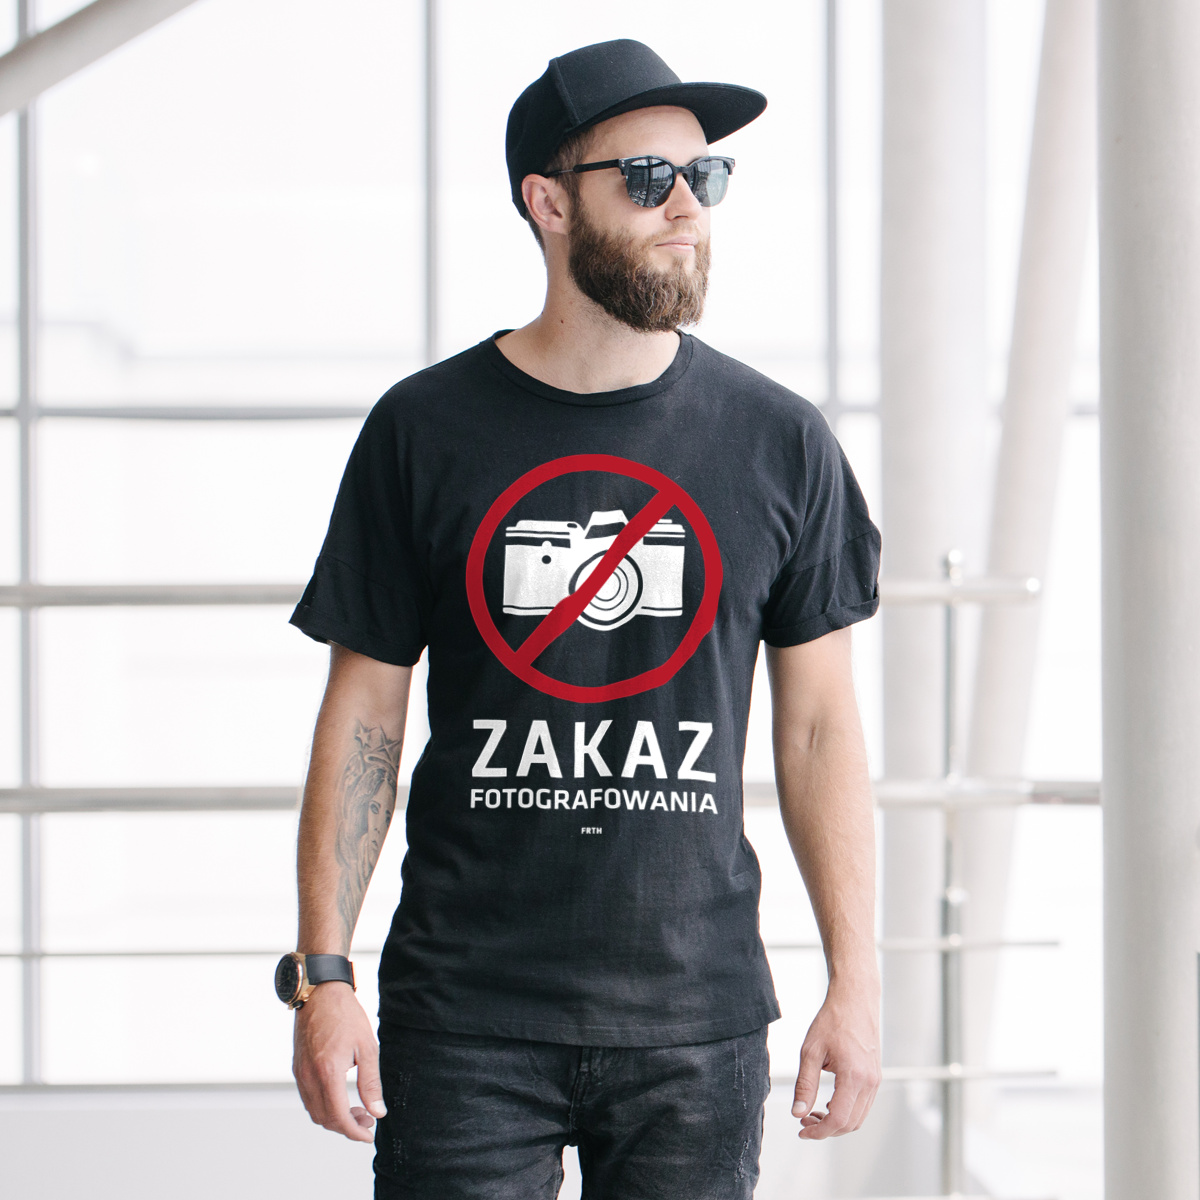 Zakaz Fotografowania - Męska Koszulka Czarna